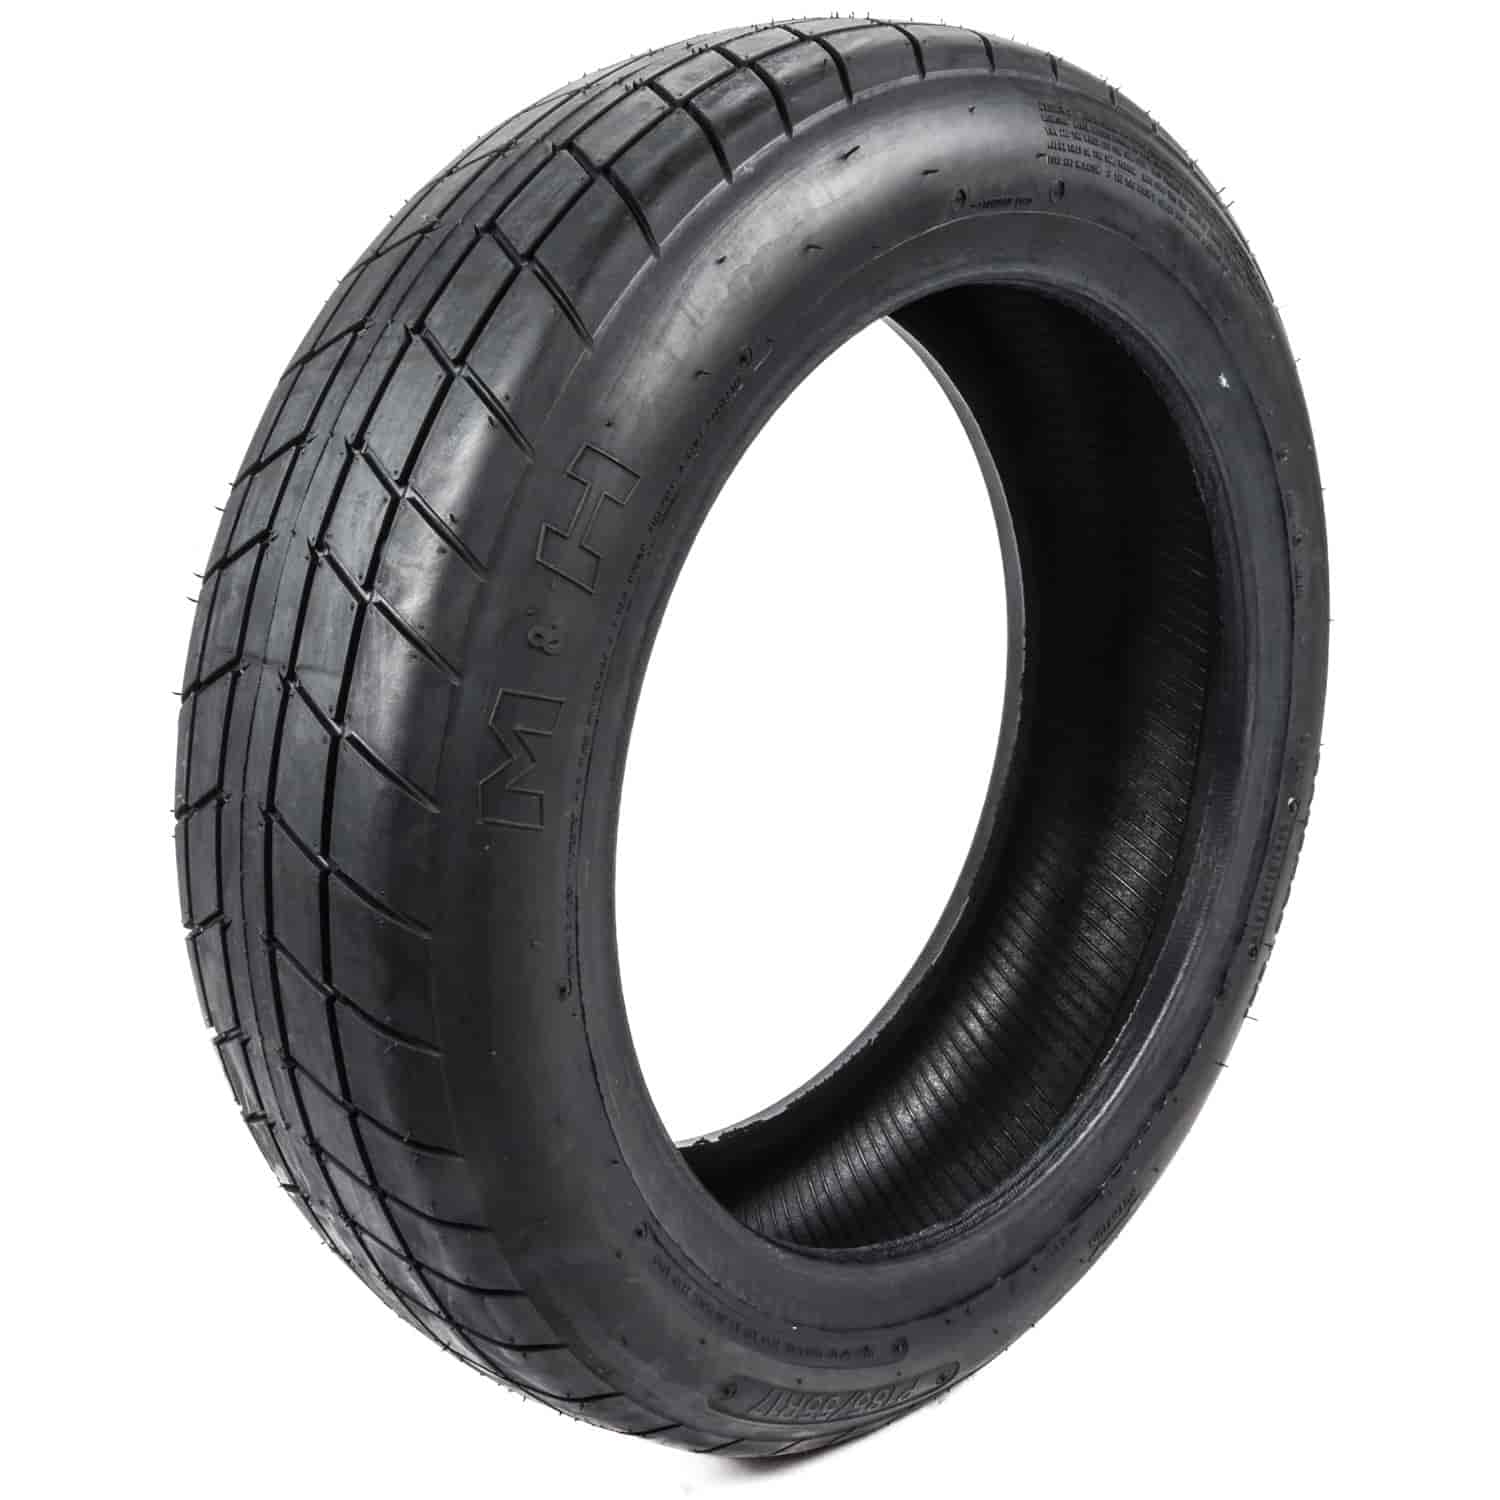 Drag Radial Tire 185/55R17